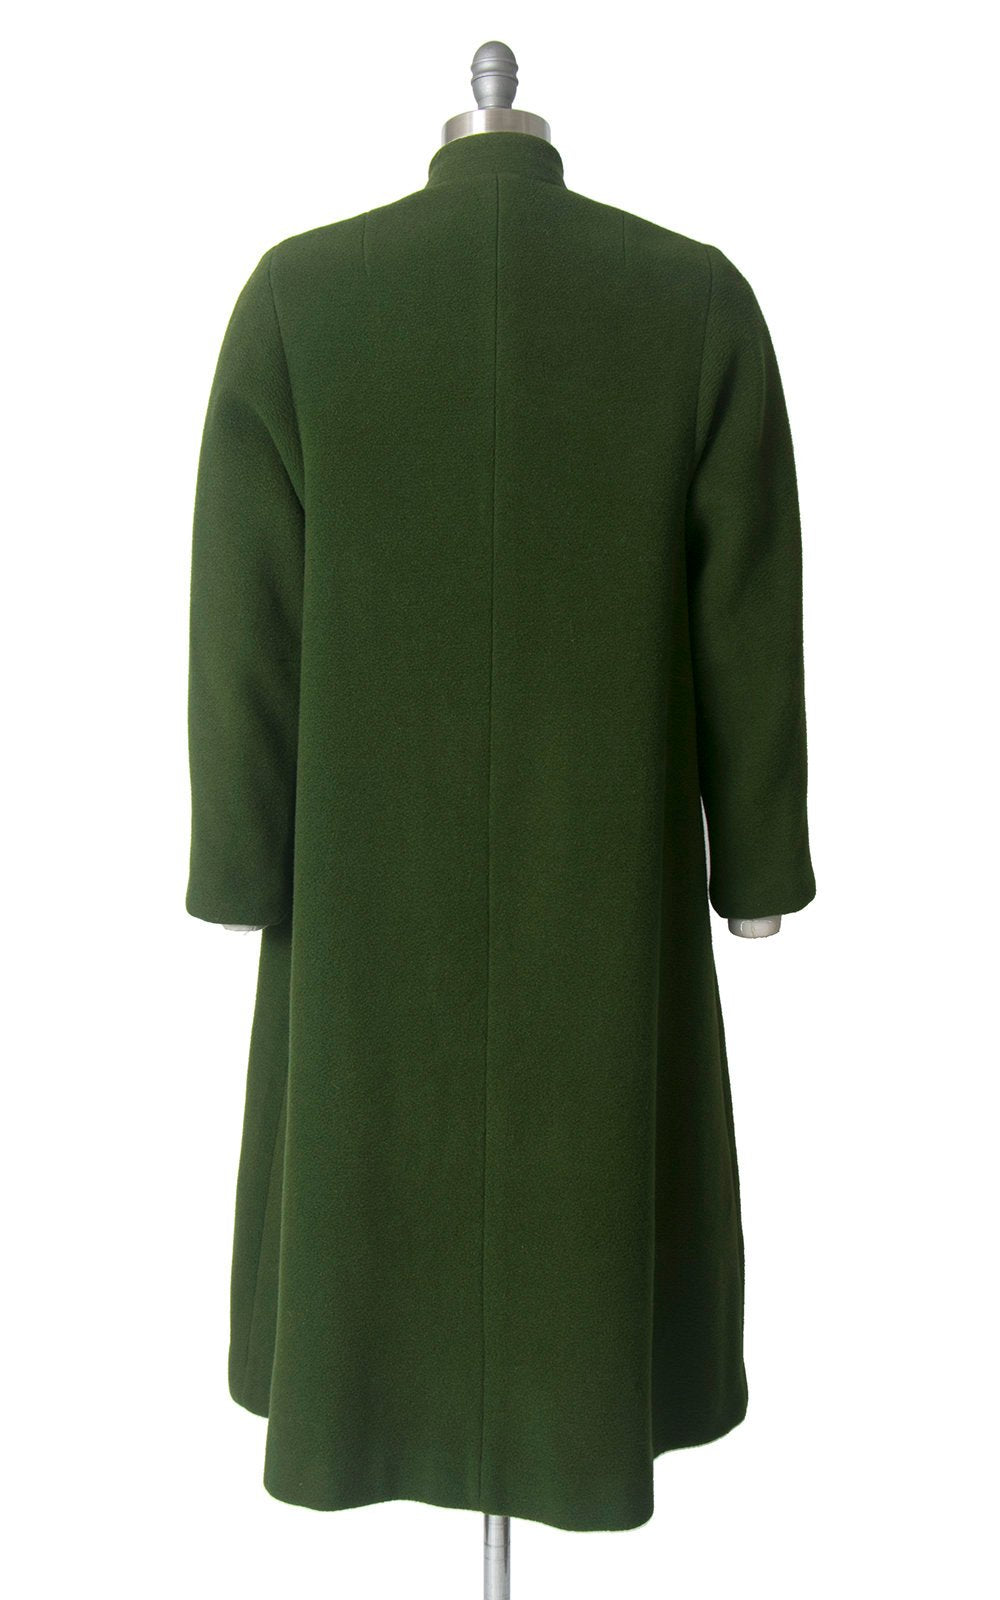 Vintage 1940s Coat | 40s Green Wool Toggle Closures Warm Winter Swing Coat (medium)